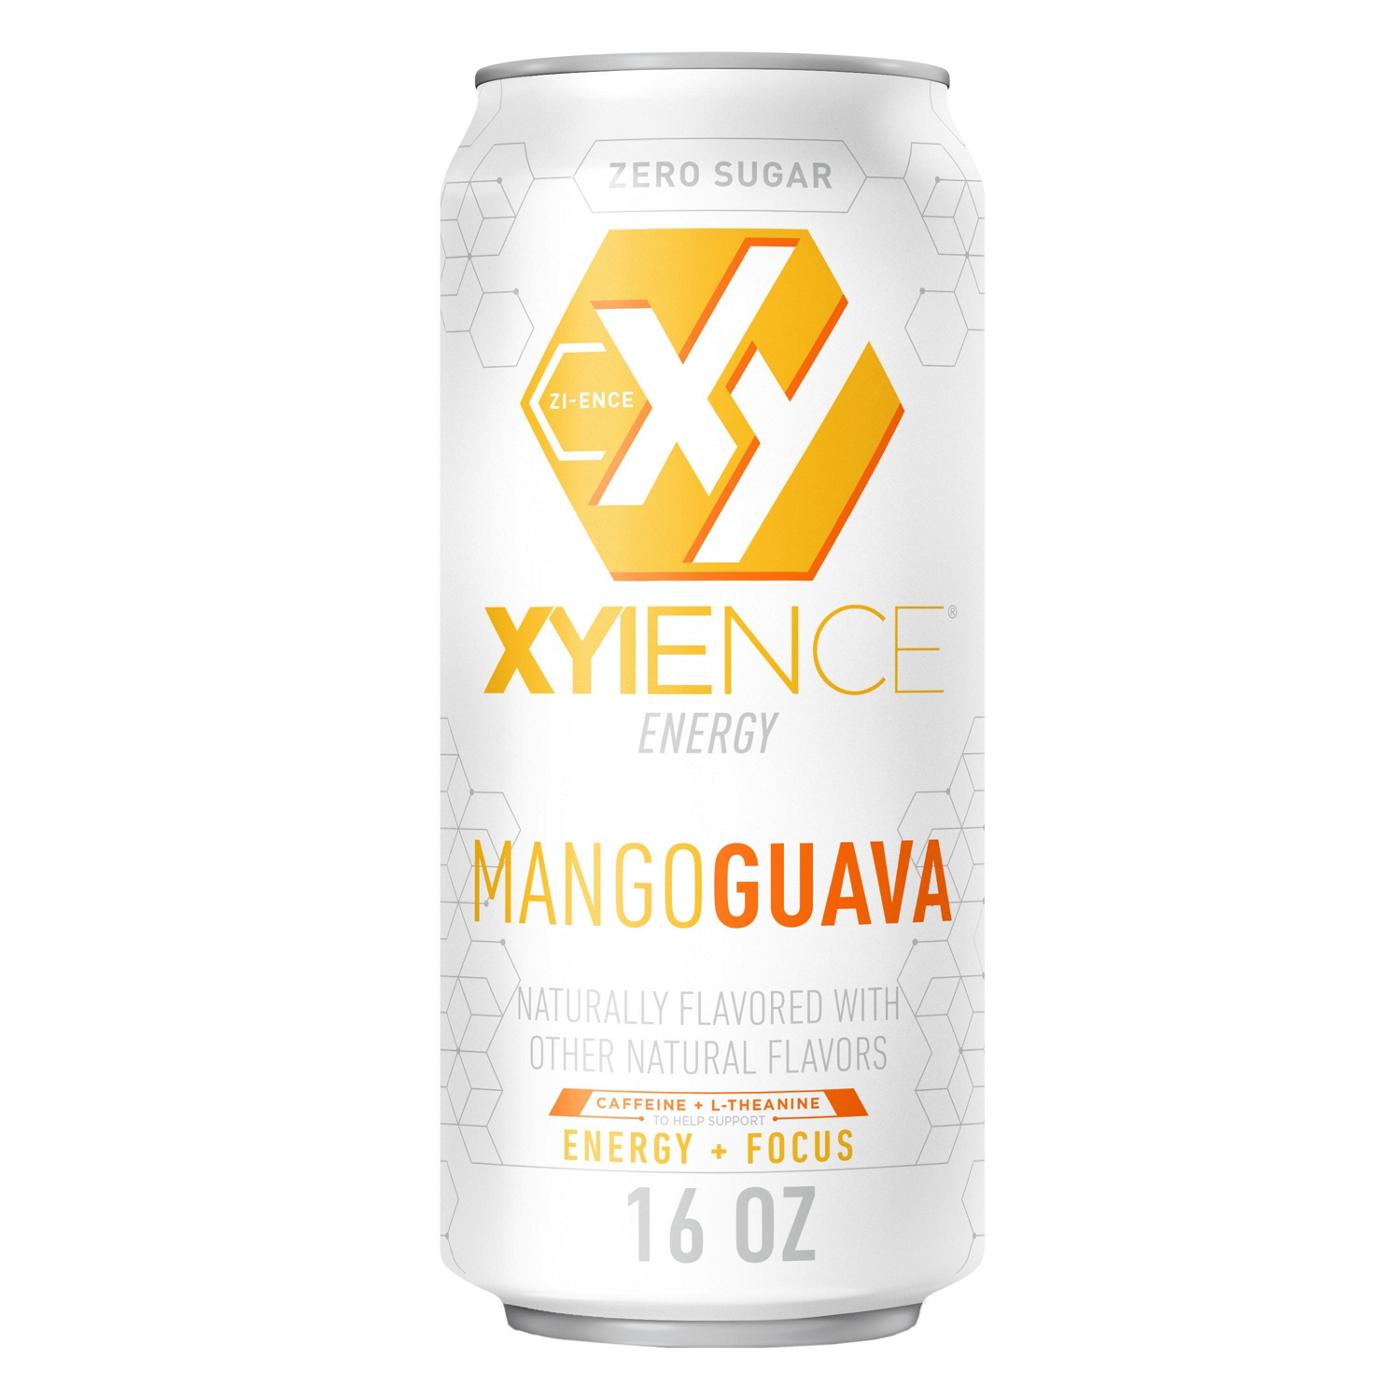 XYIENCE Zero Sugar Energy Drink - Mango Guava; image 1 of 6